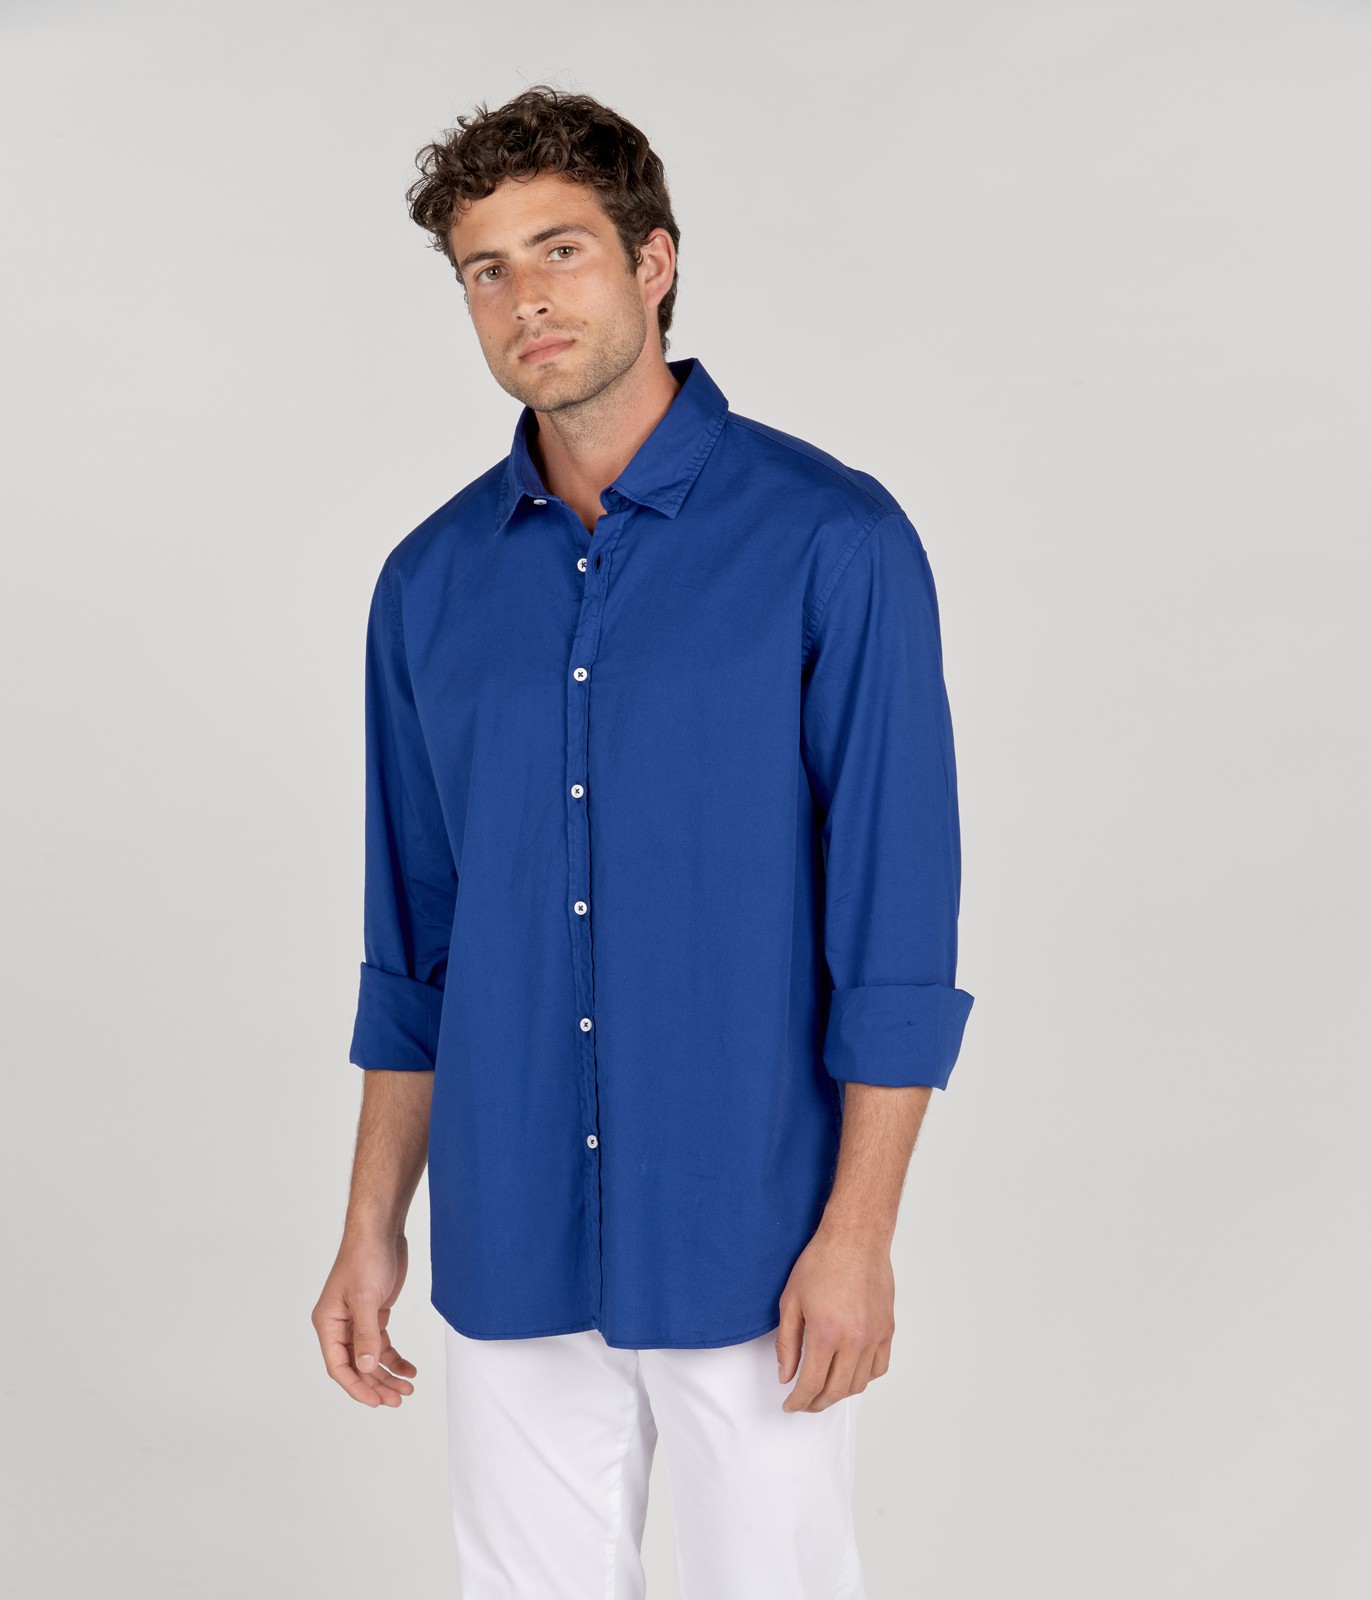 Plain indigo color long sleeves shirt brand for Europann men Quality